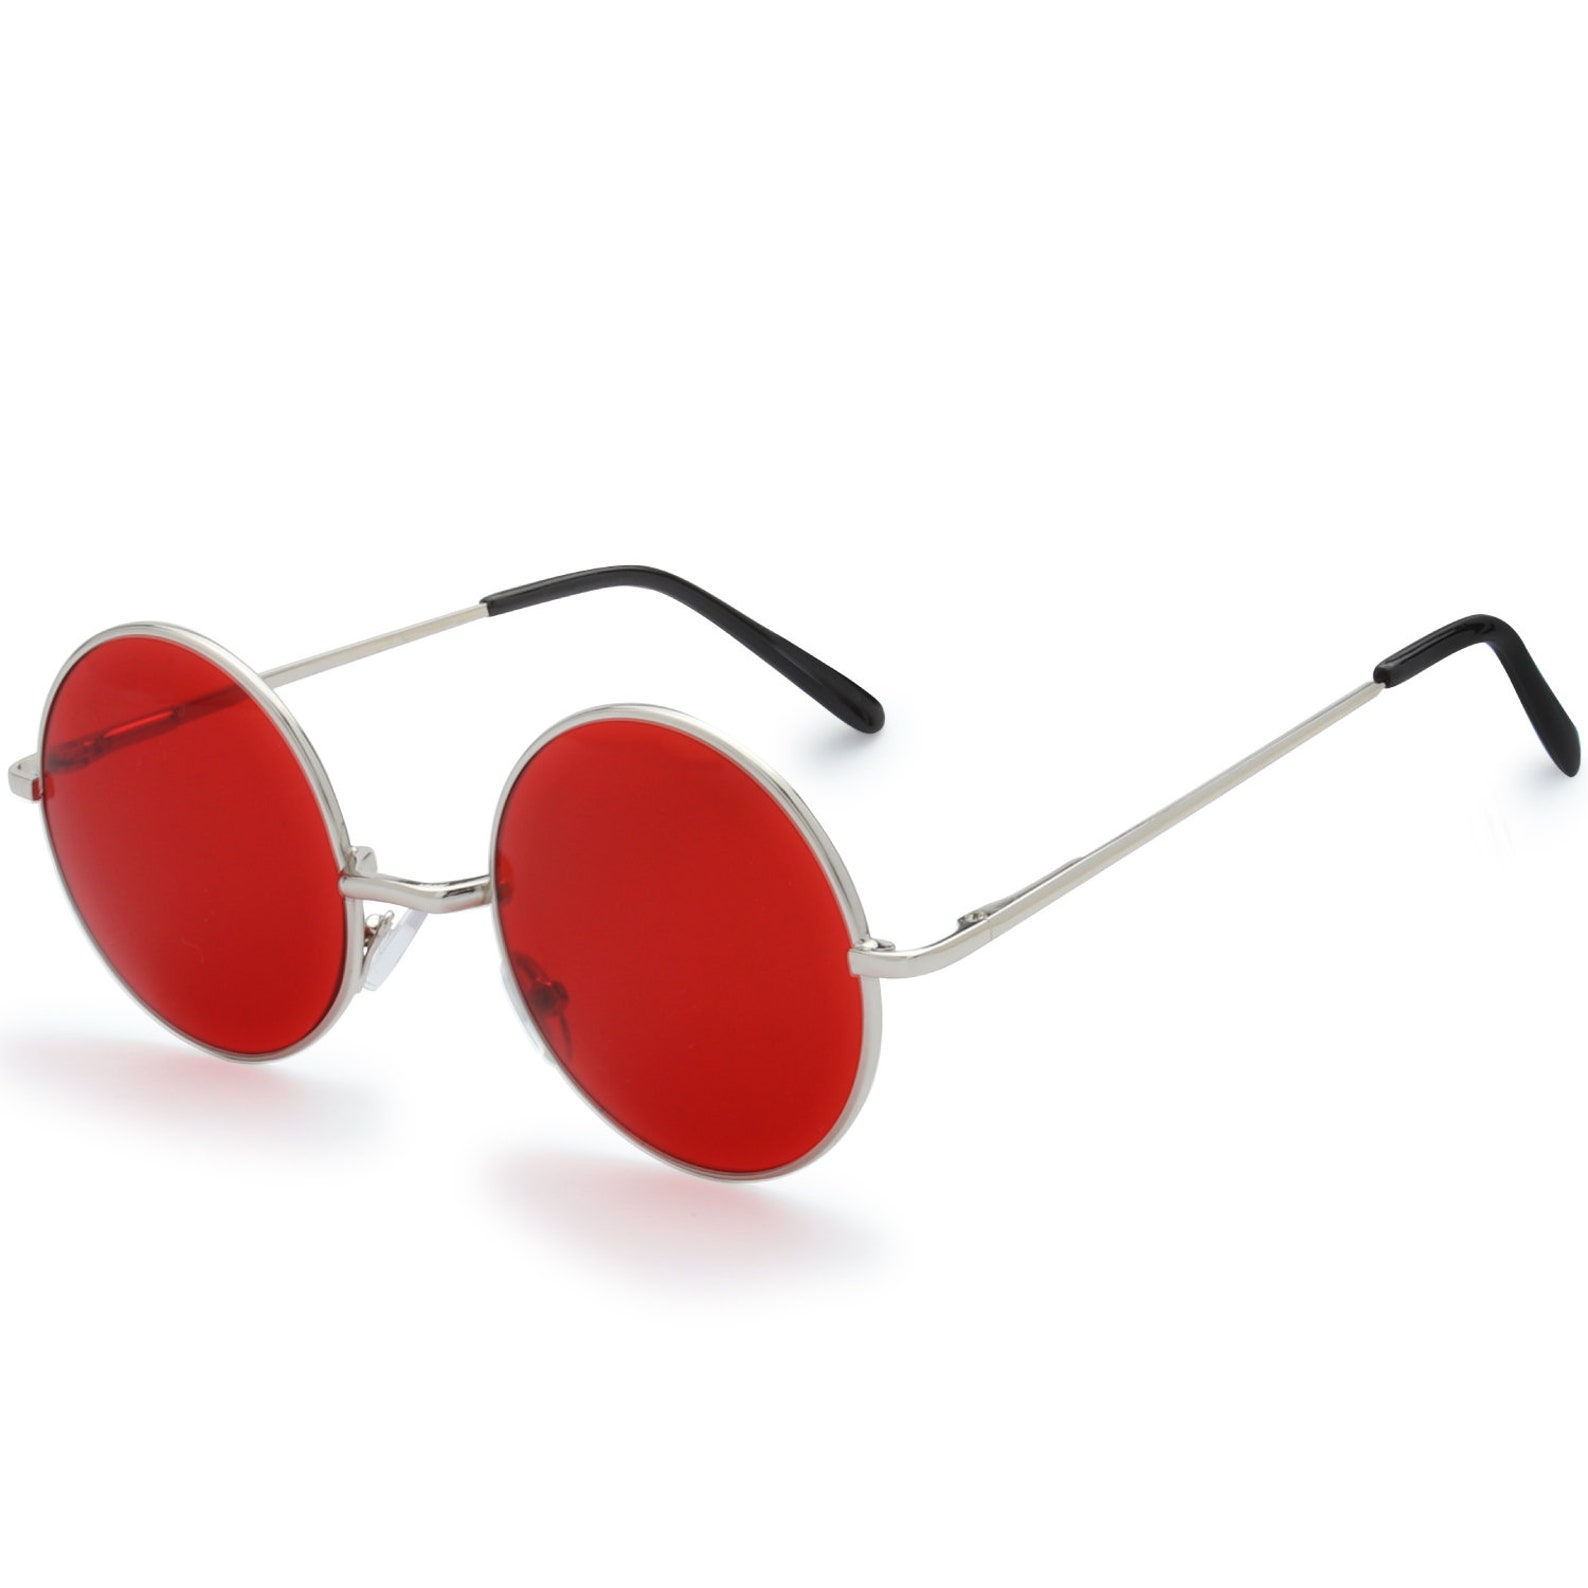 The Fresh Retro John Lennon Style Sunglasses Round Colorful - Etsy